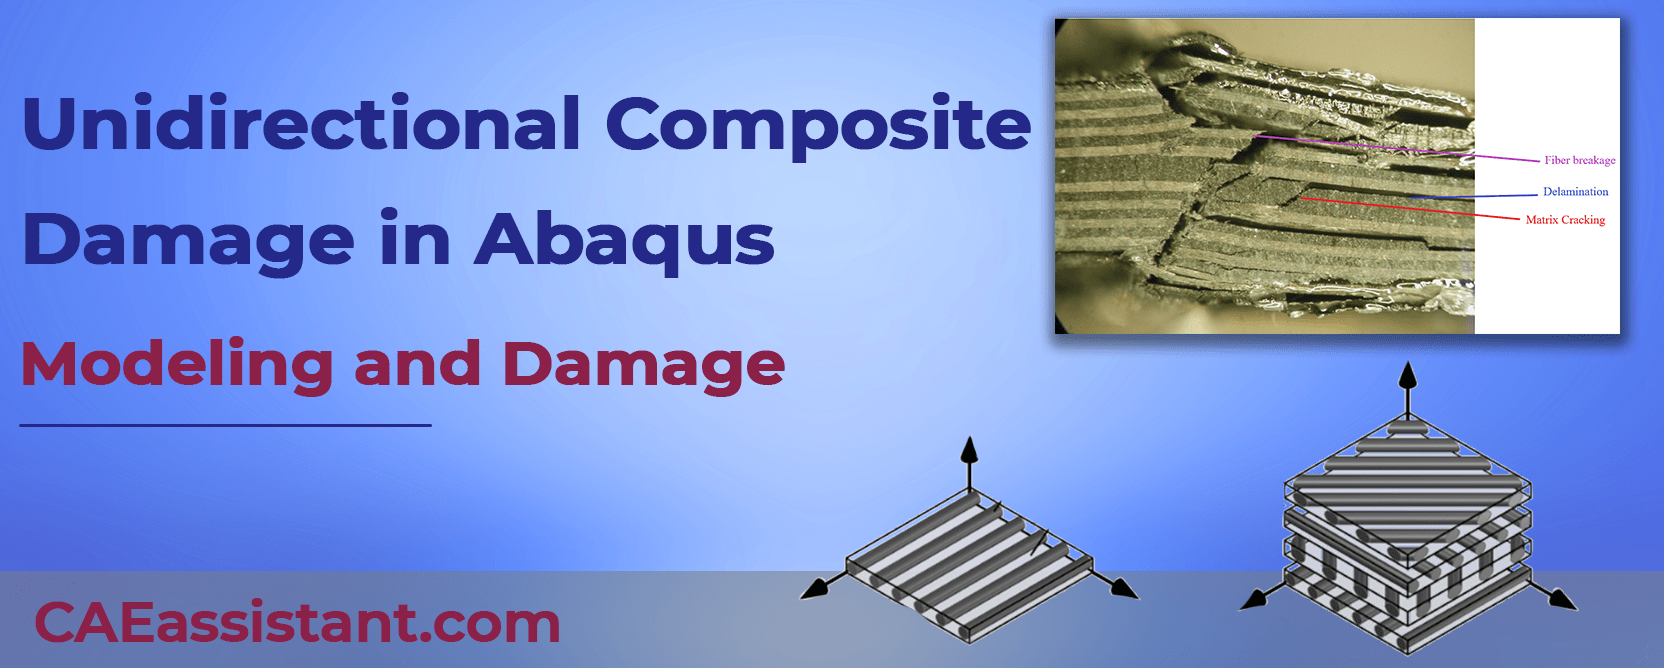 unidirectional composite damage